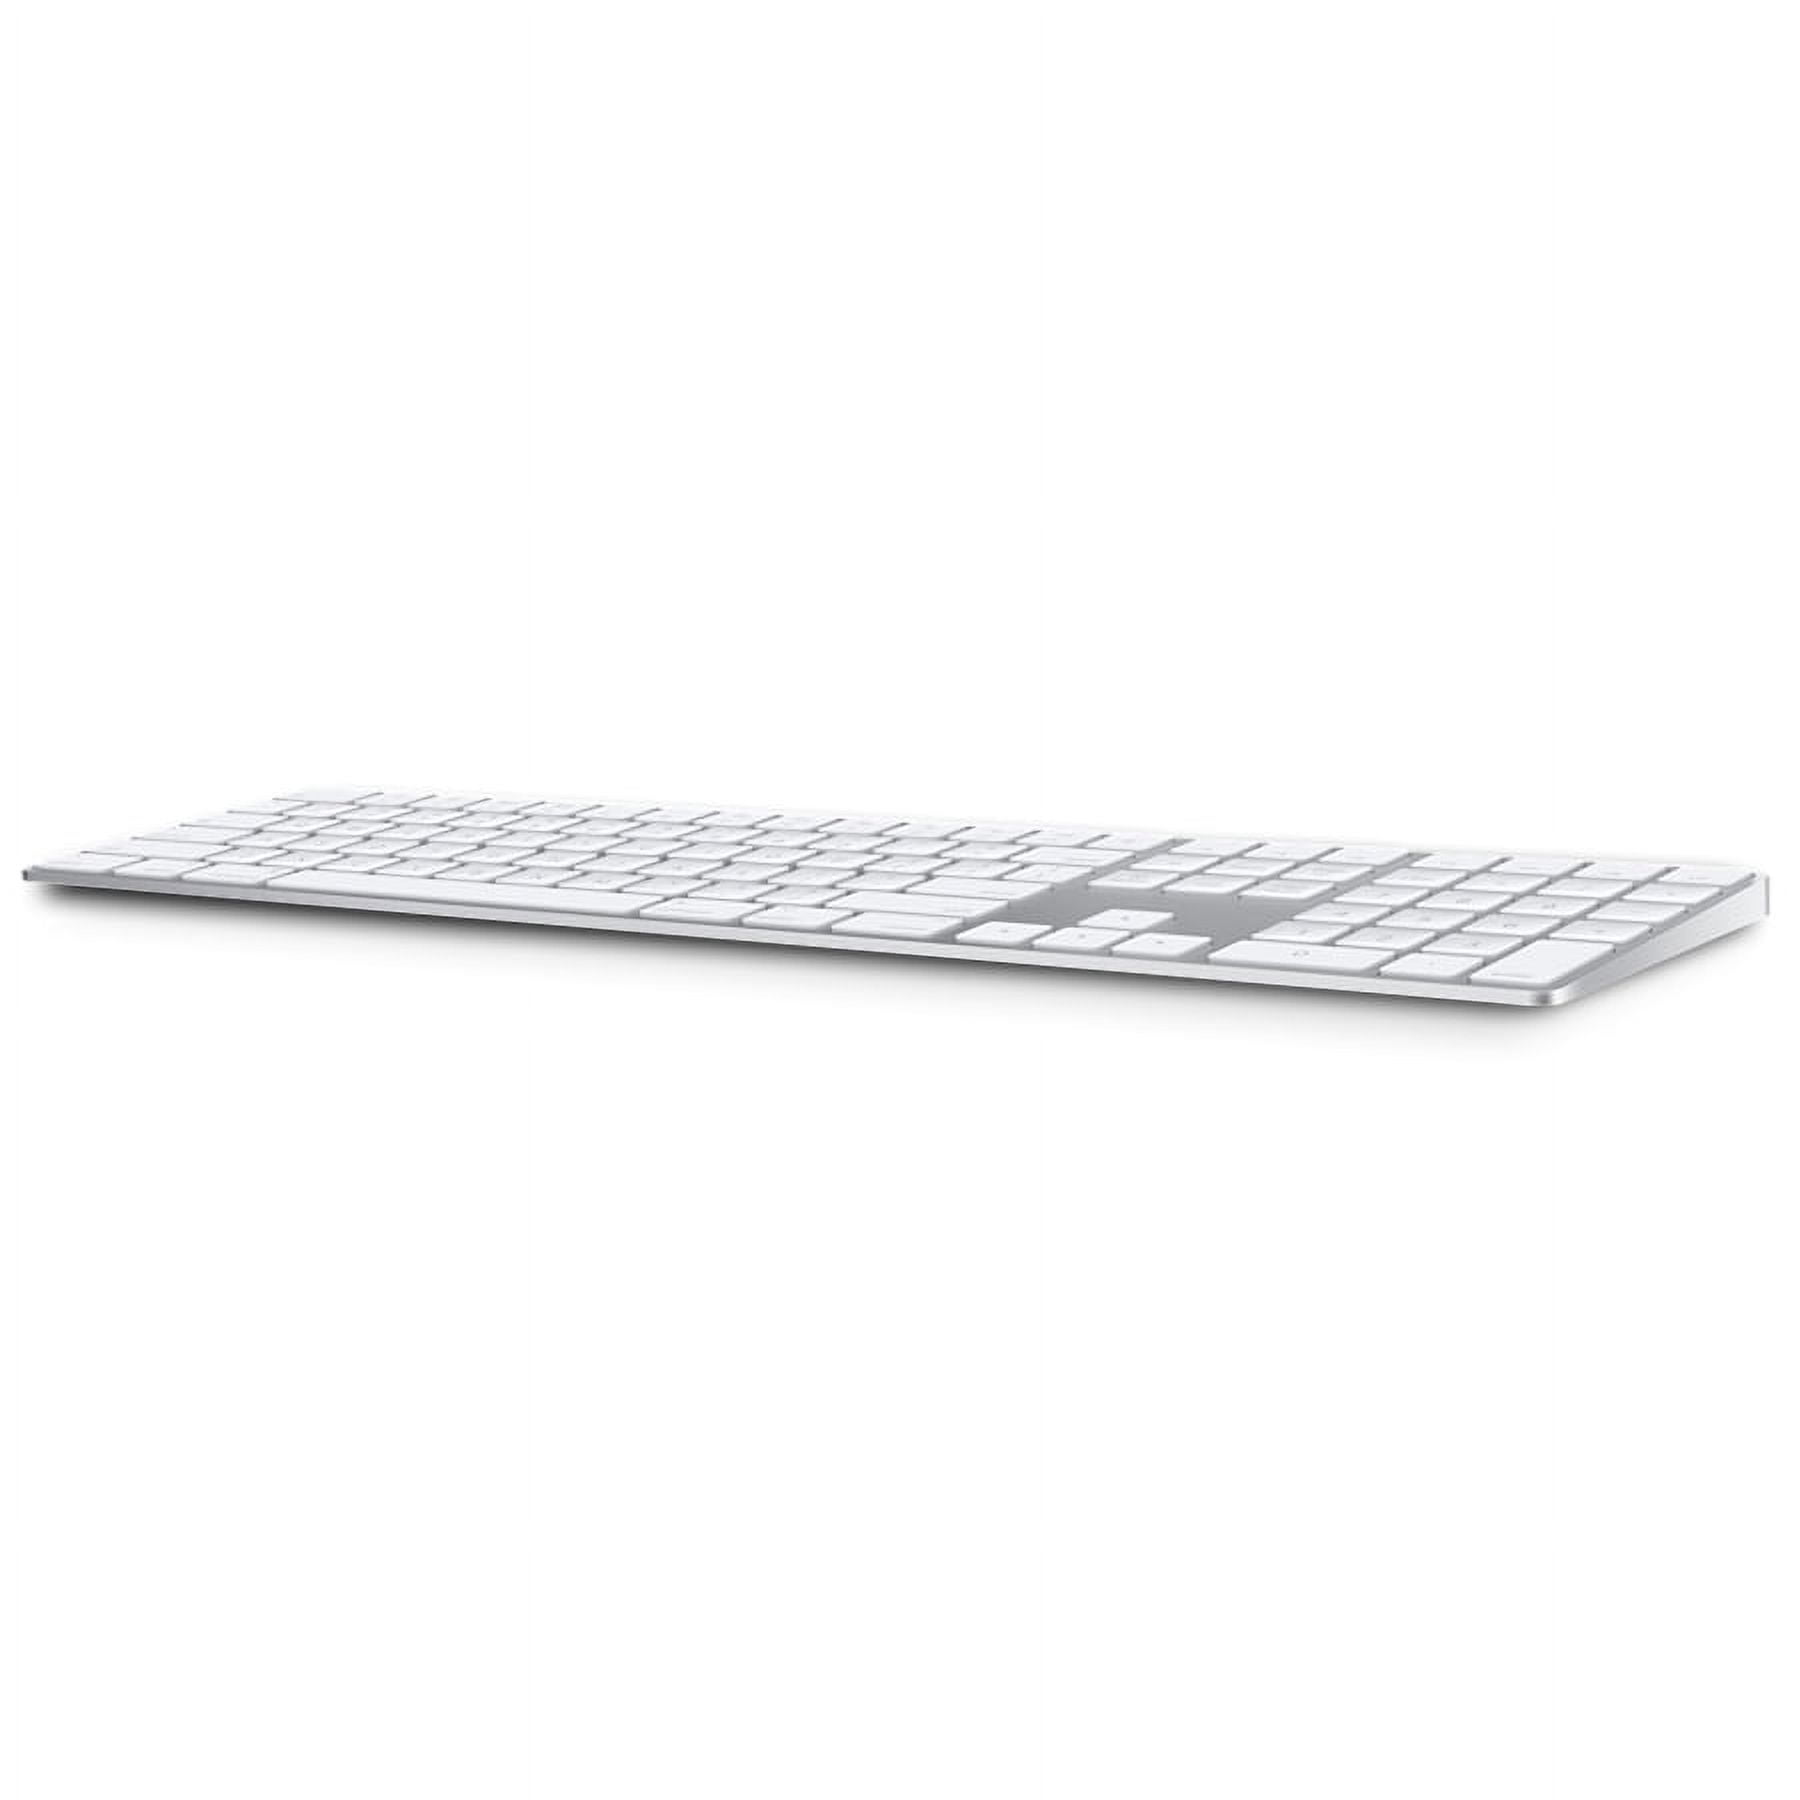 Apple MQ052LL/A Magic Keyboard with Numeric at MacSales.com